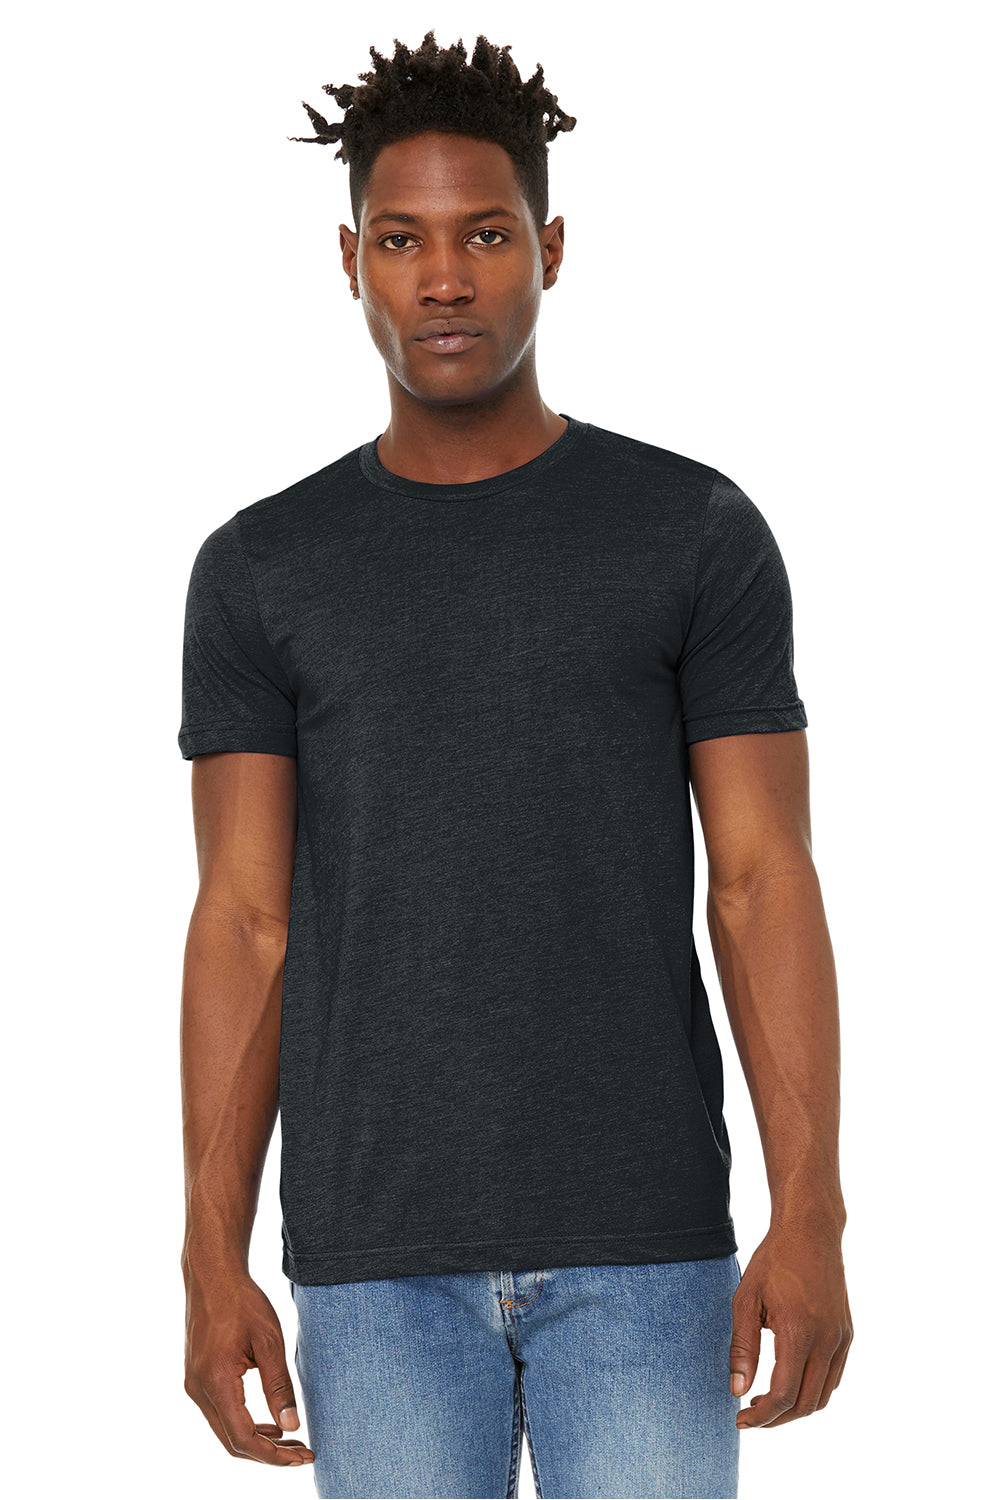 Bella + Canvas BC3301/3301C/3301 Mens Jersey Short Sleeve Crewneck T-Shirt Heather Dark Grey Model Front